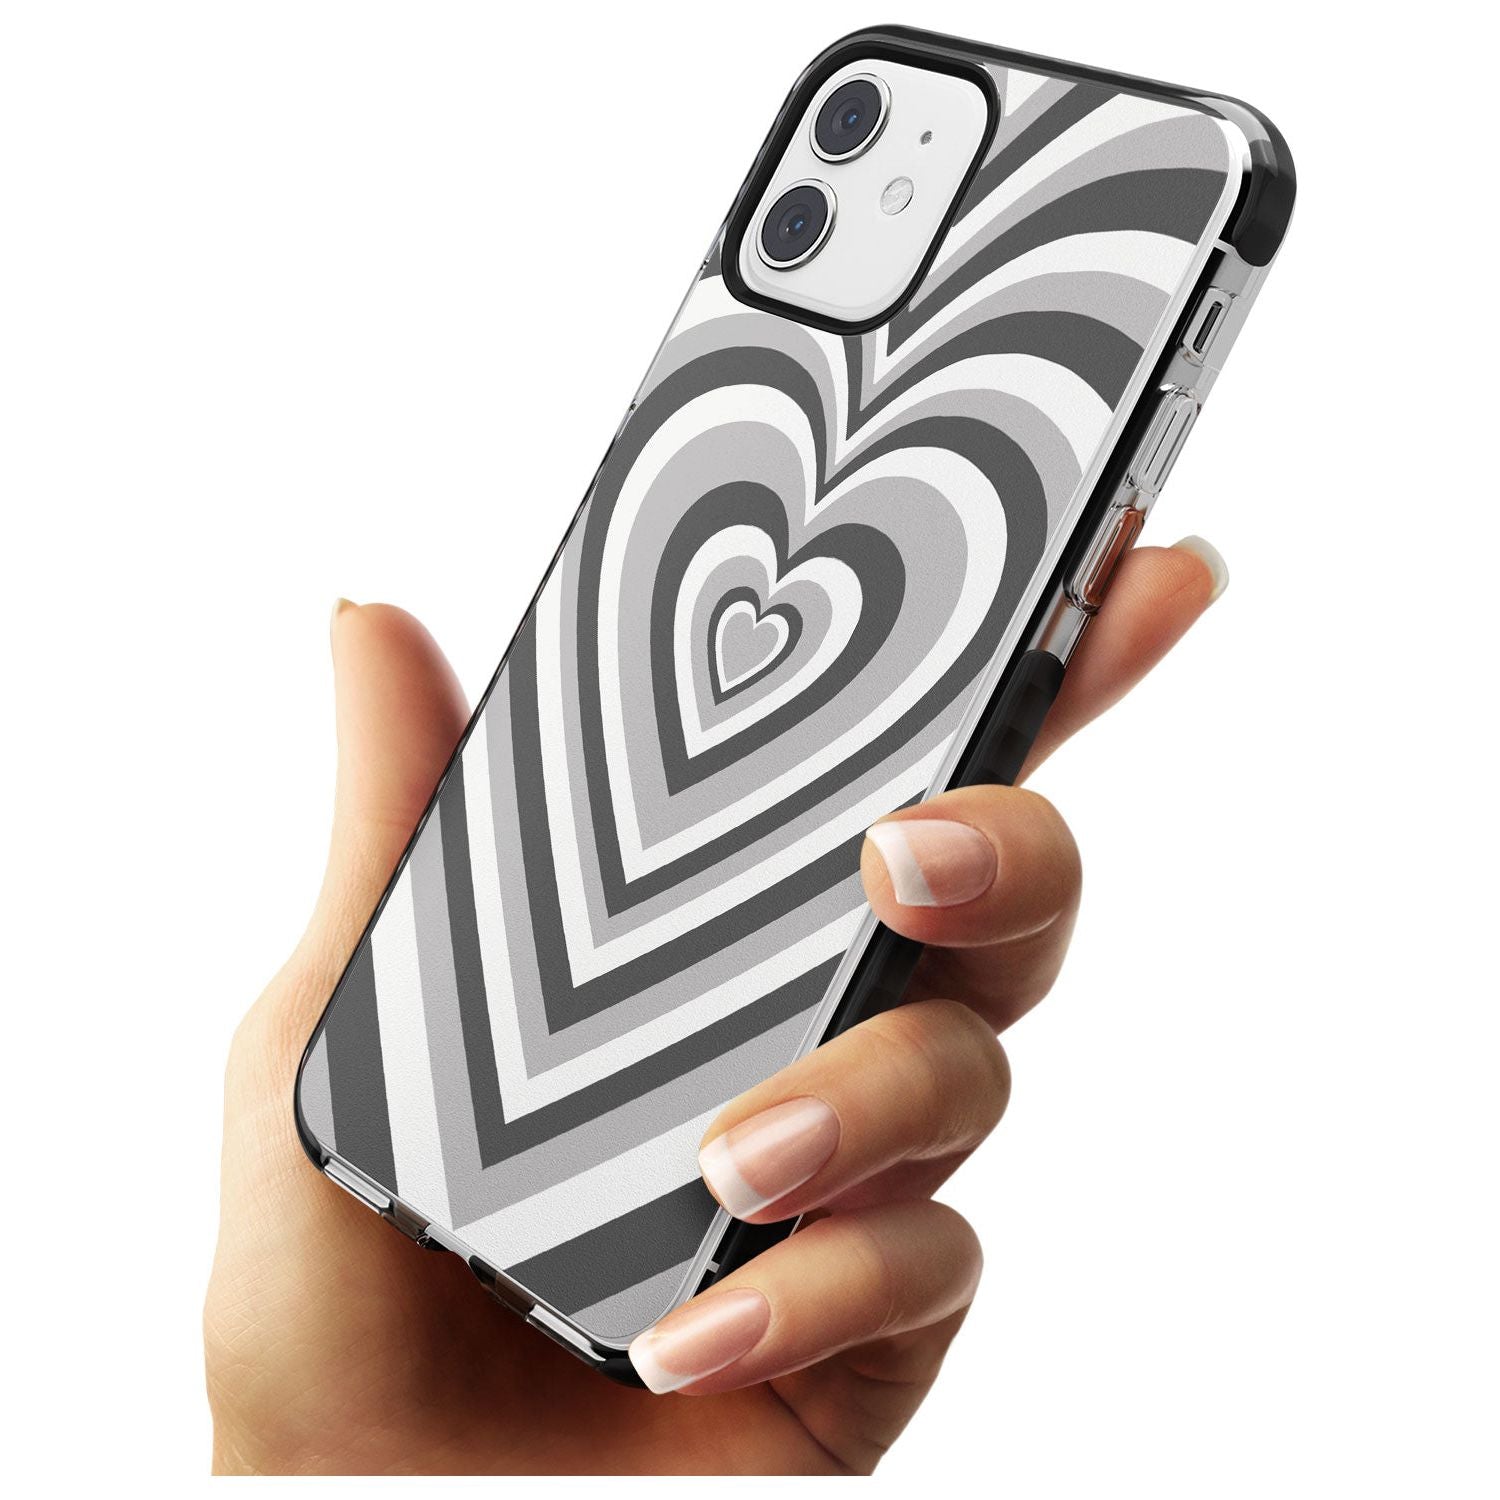 Monochrome Heart Illusion Black Impact Phone Case for iPhone 11 Pro Max